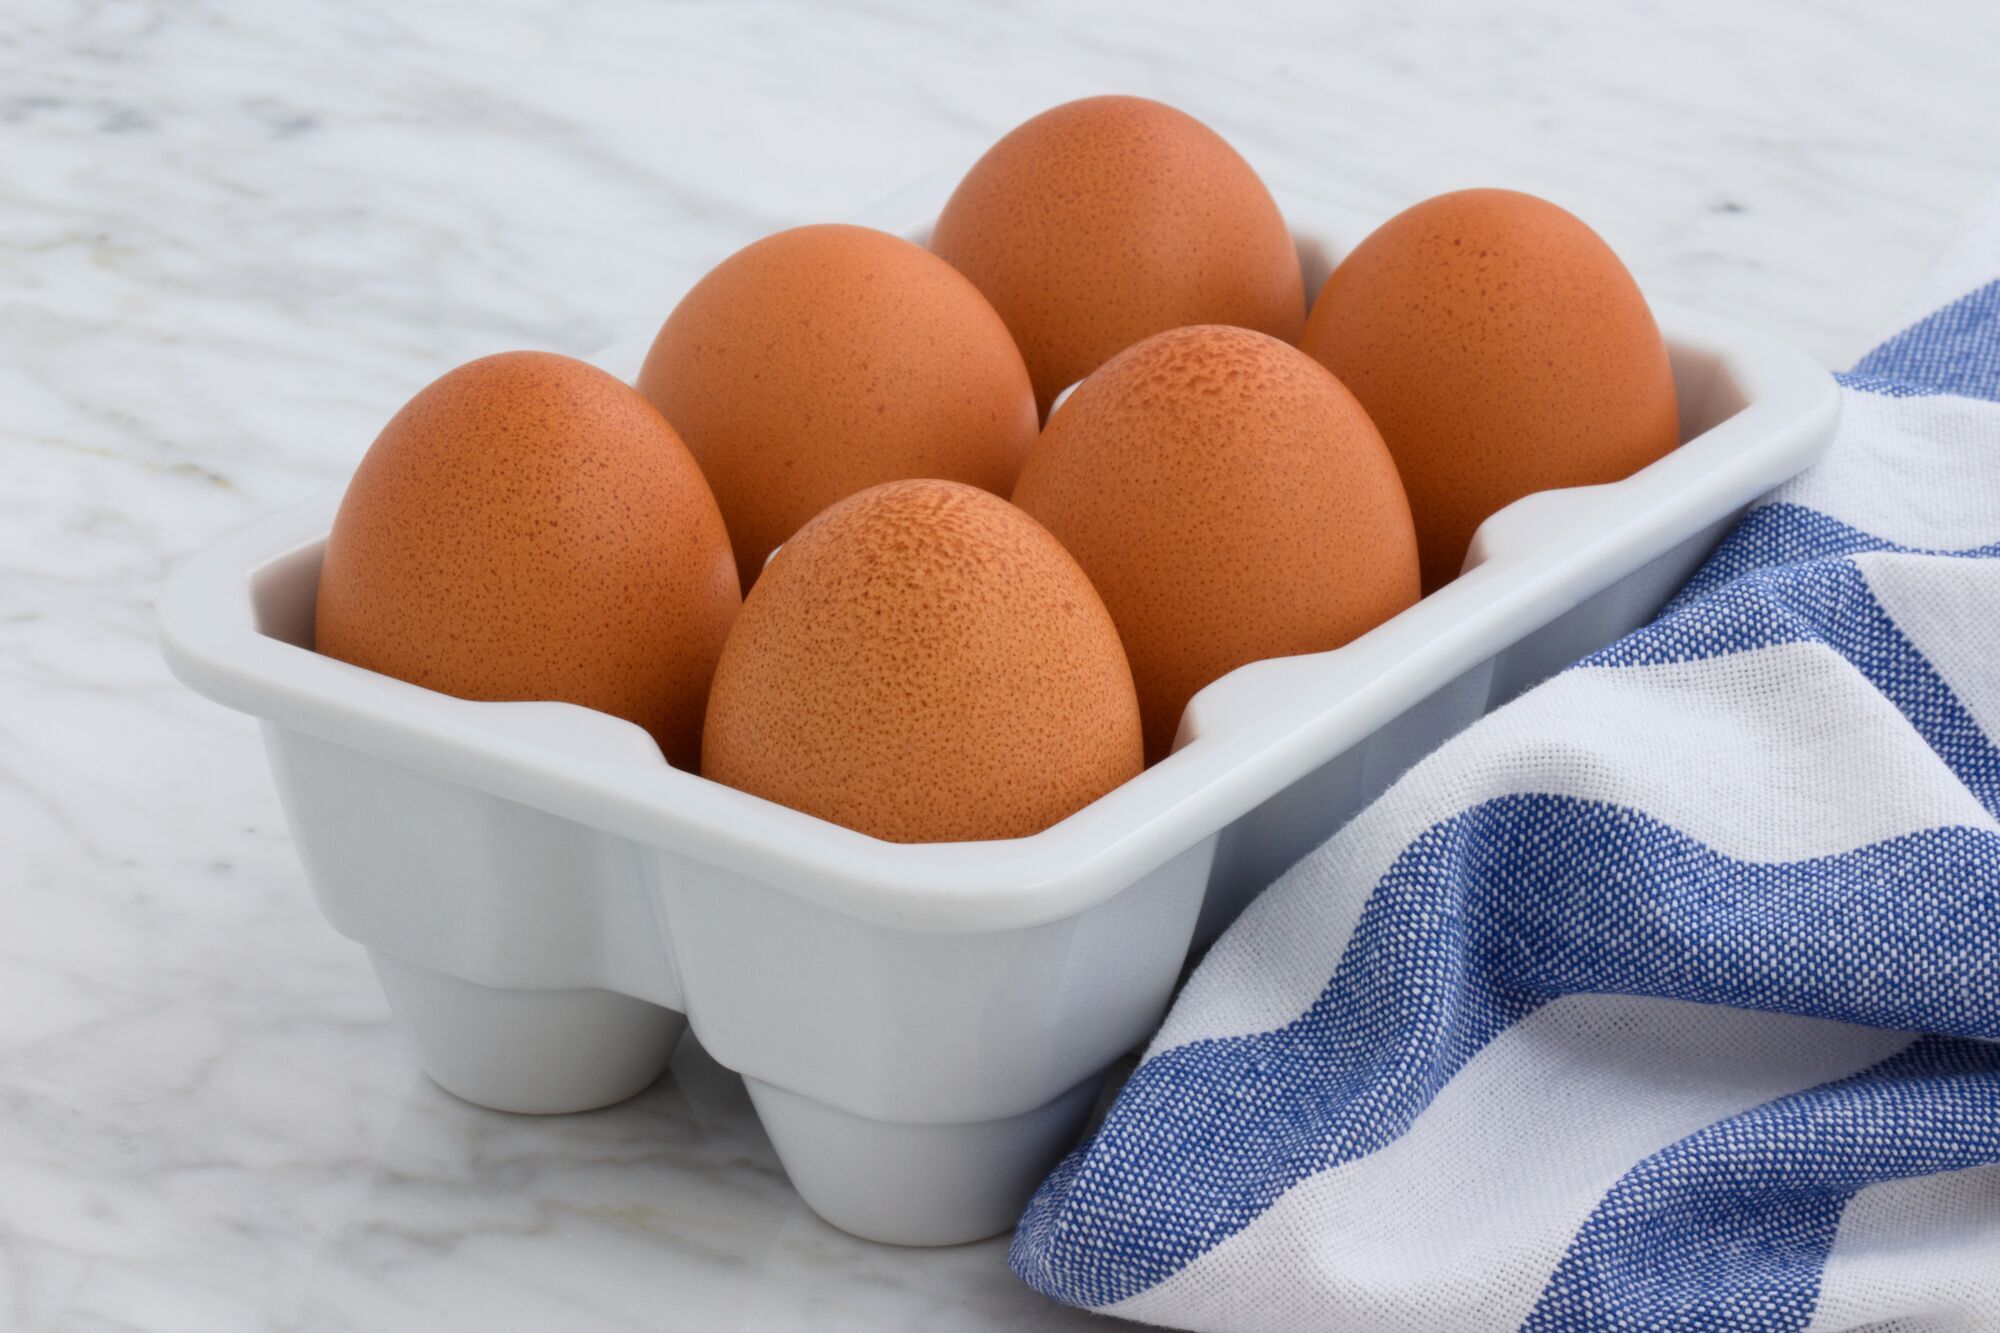 Prices for eggs have fallen in Ukraine